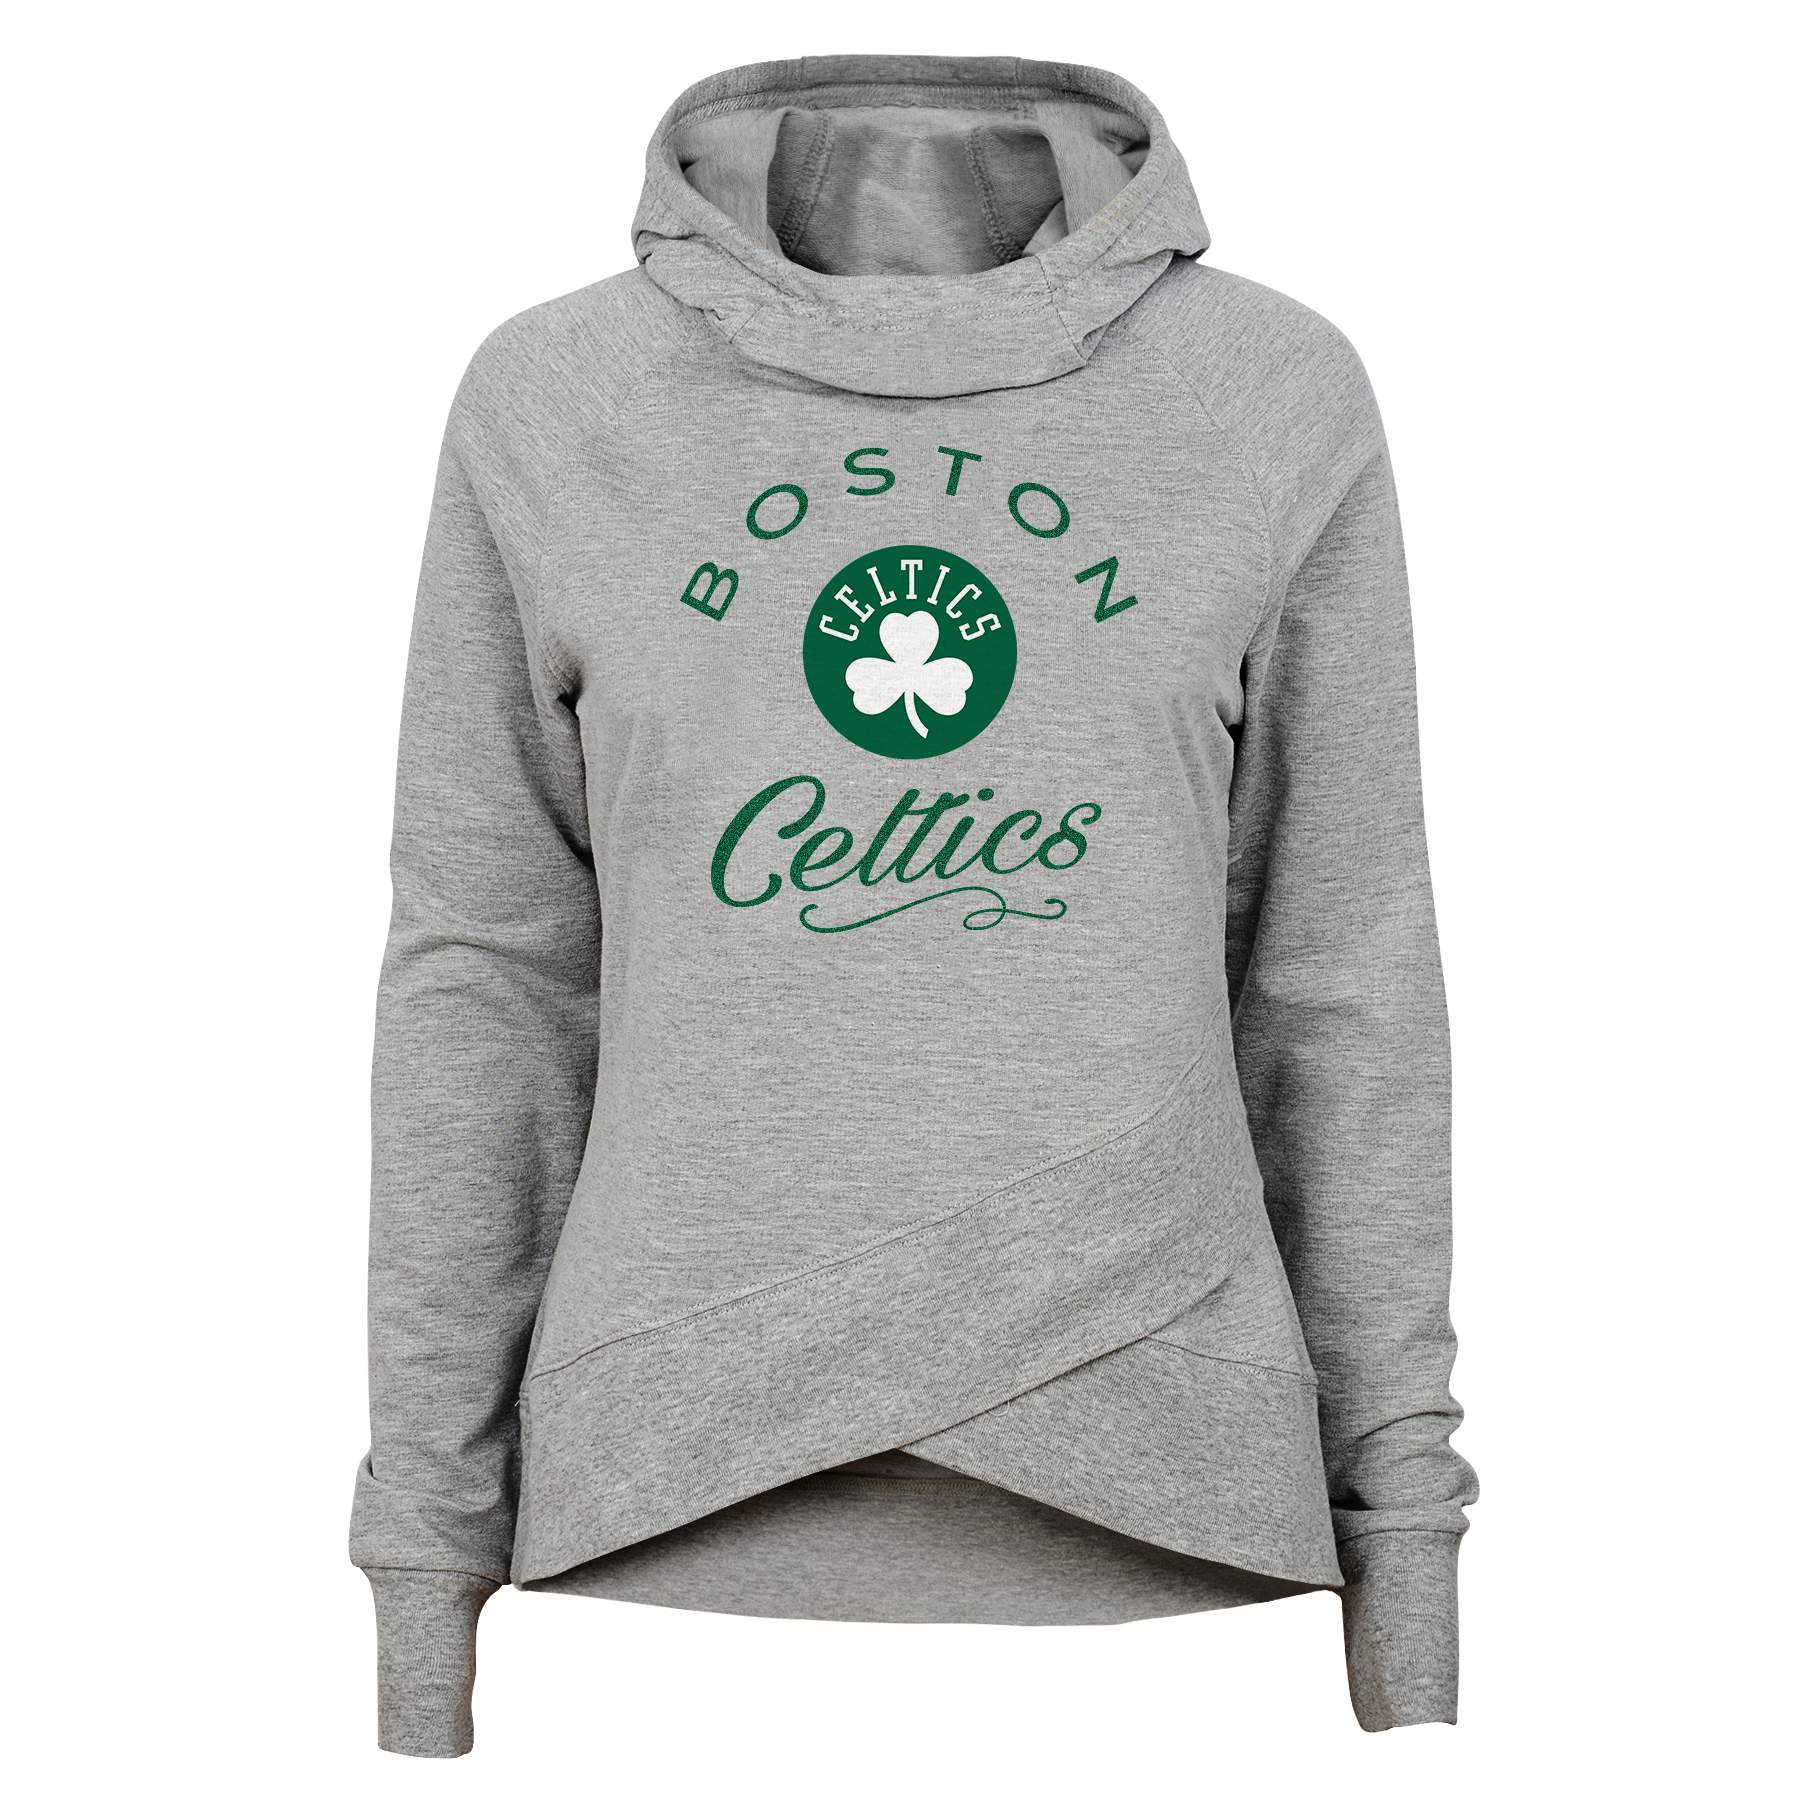 celtics womens hoodie